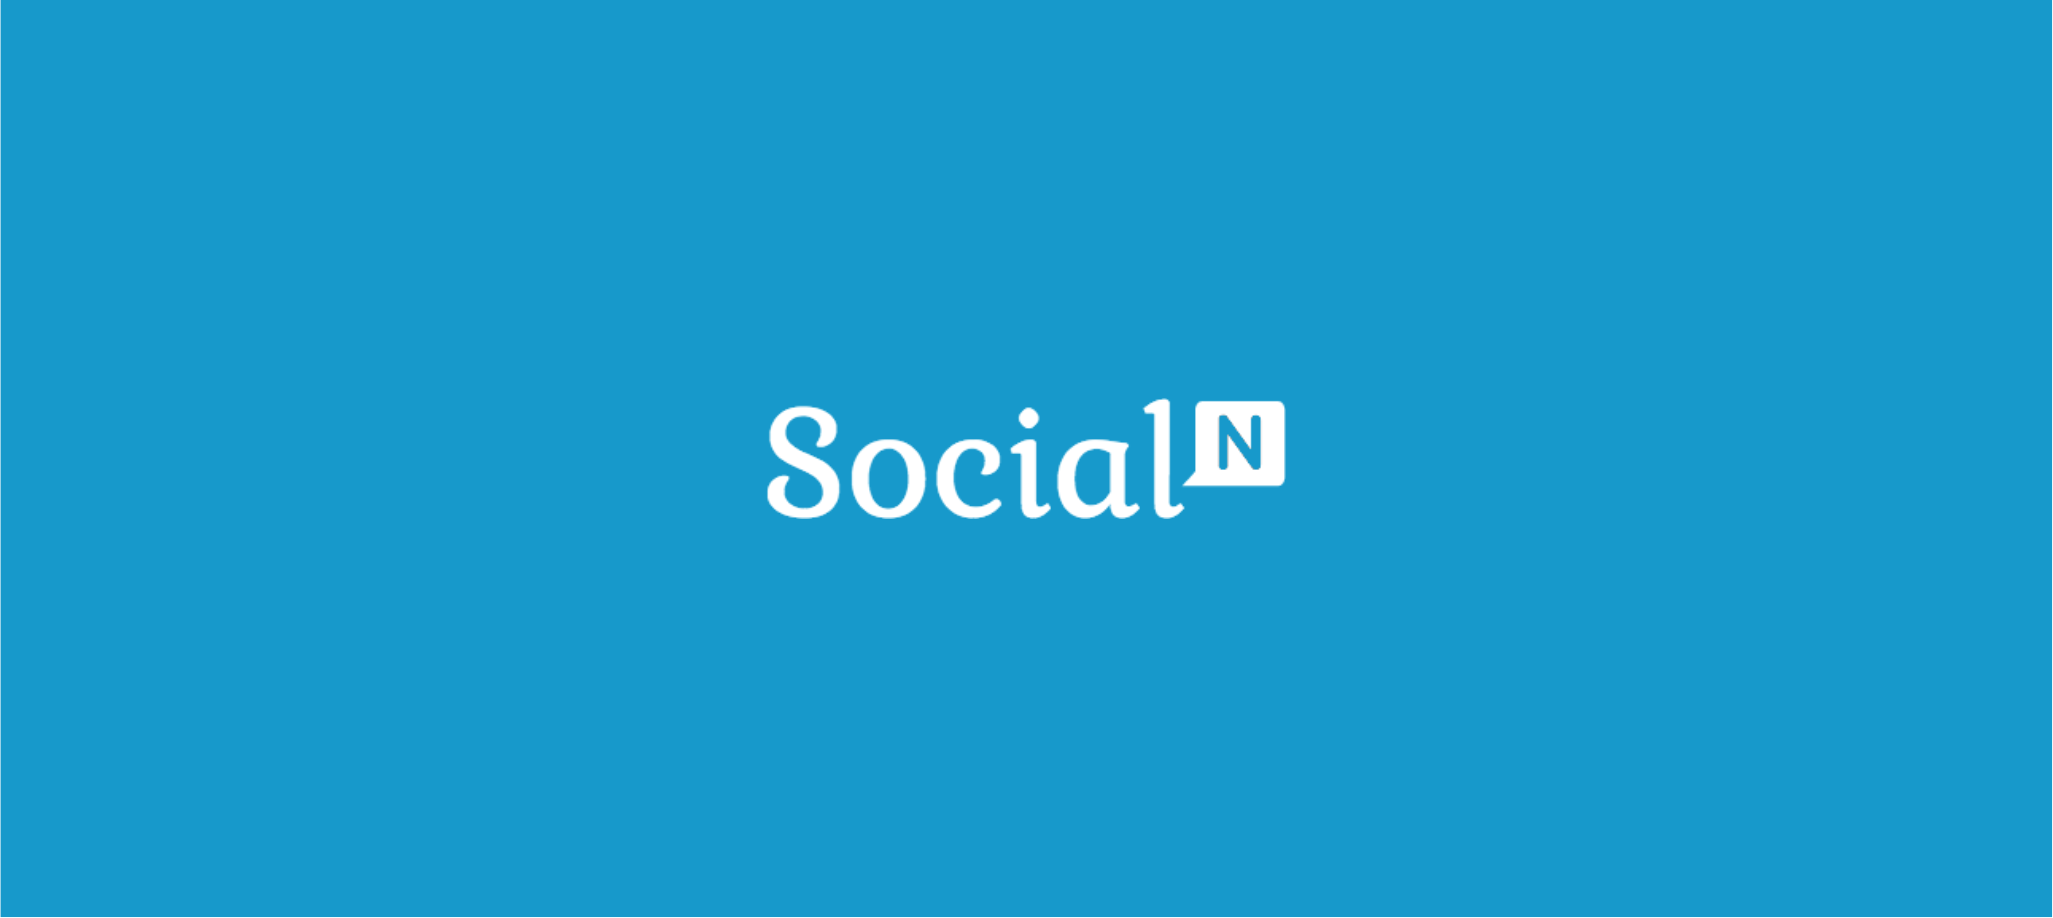 socialn reverse logo design